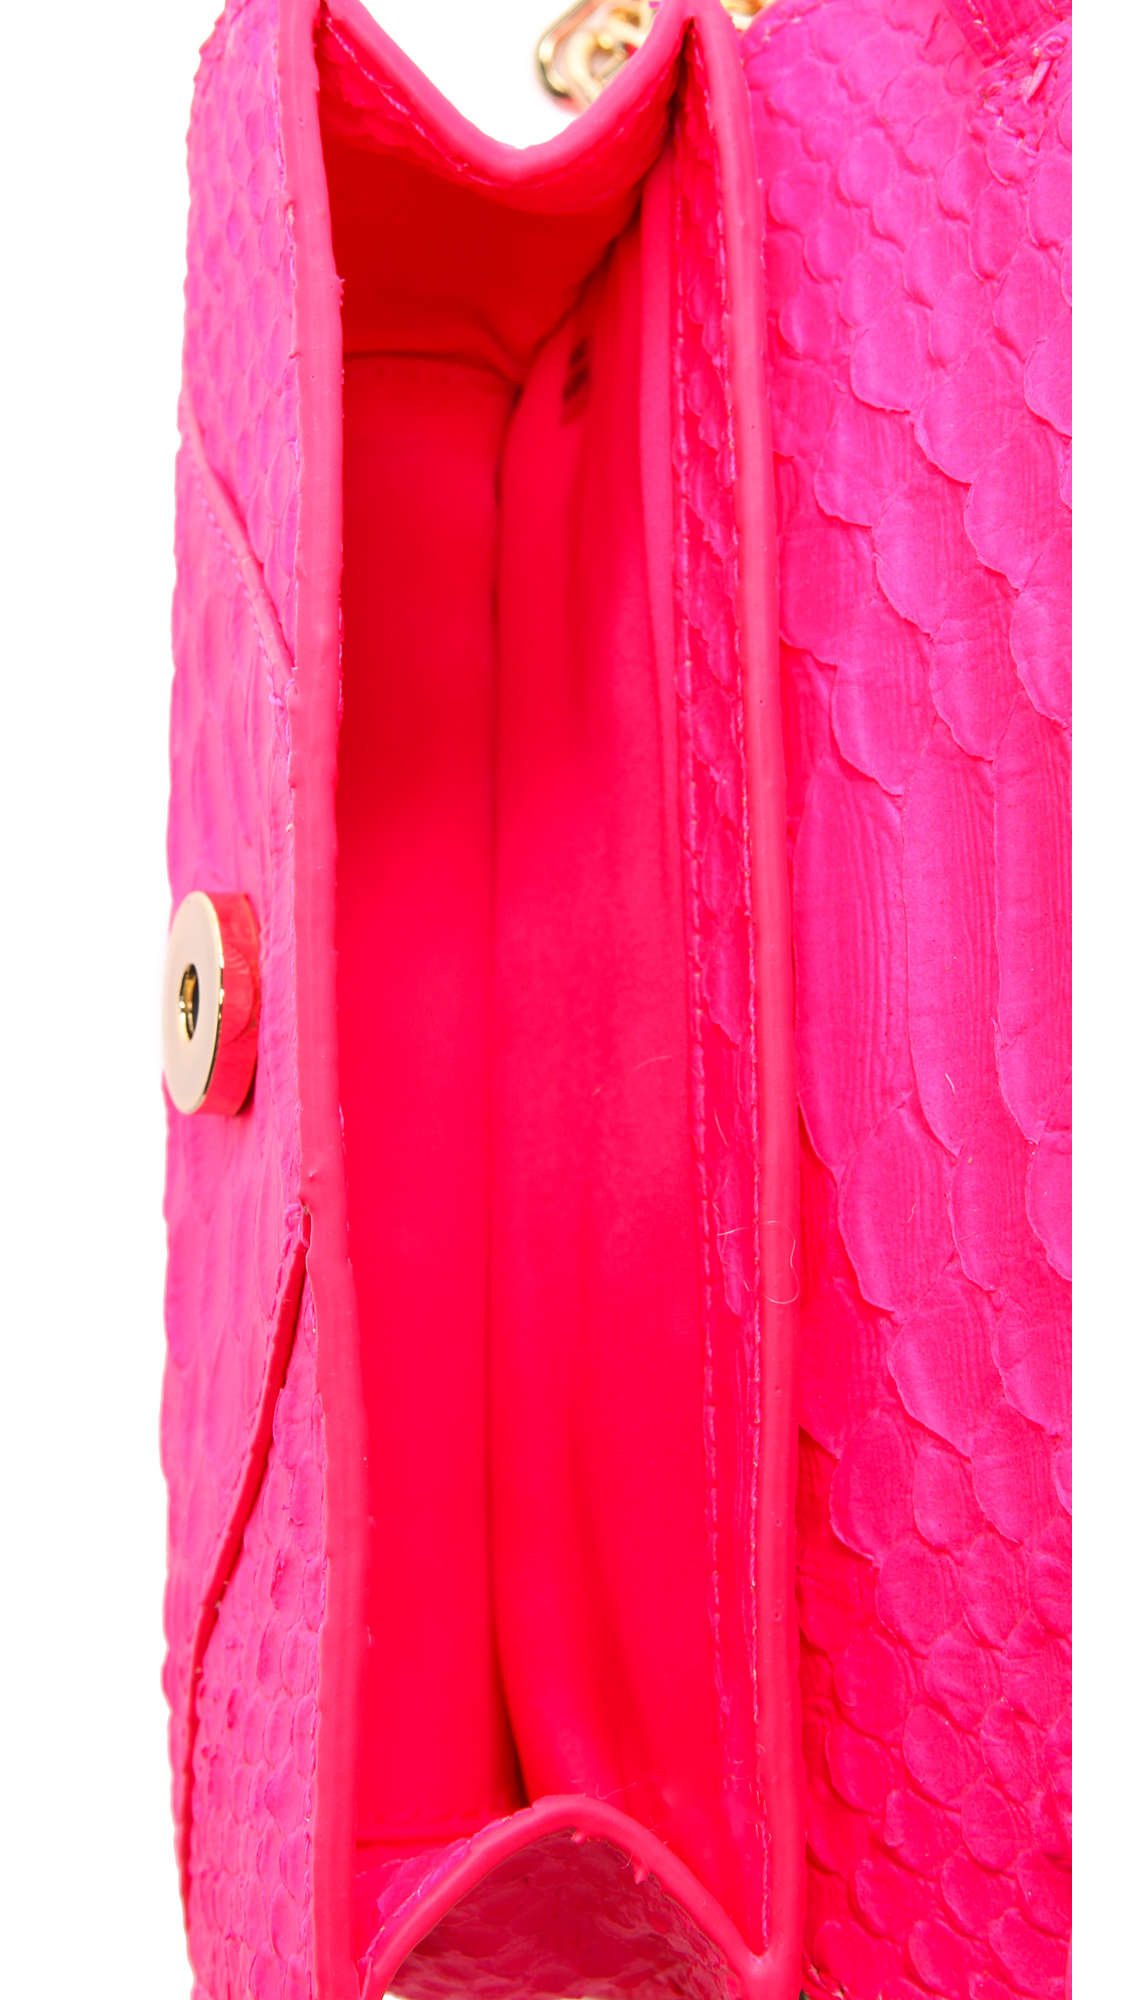 Tory Burch Neon Cross Body Bag in Pink | Lyst